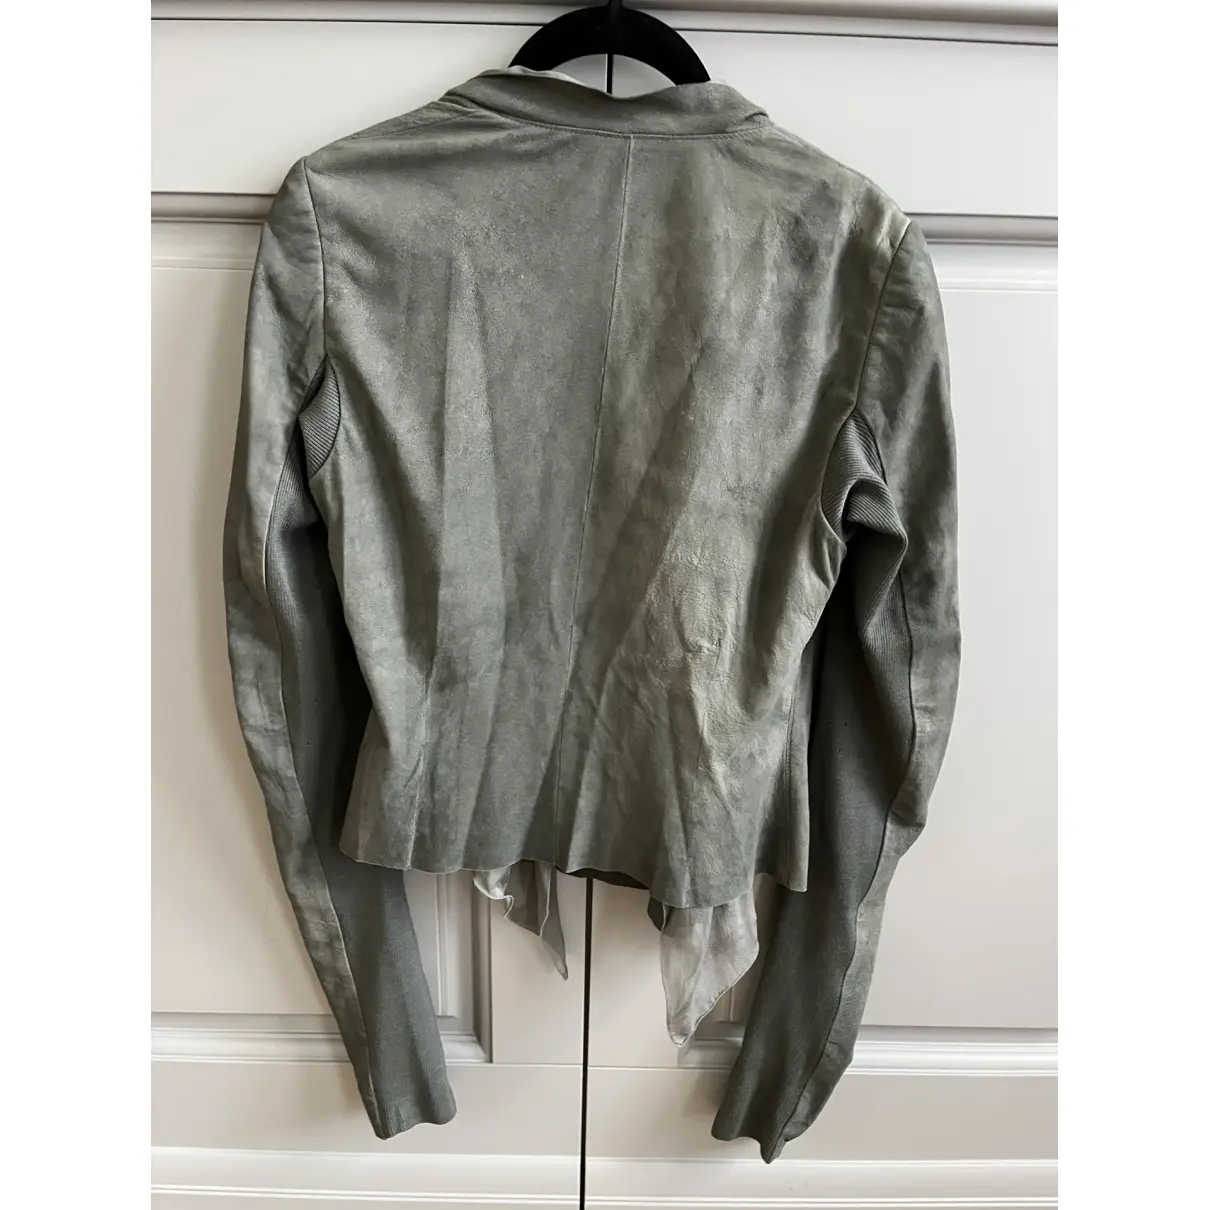 Buy Rick Owens Leather jacket online